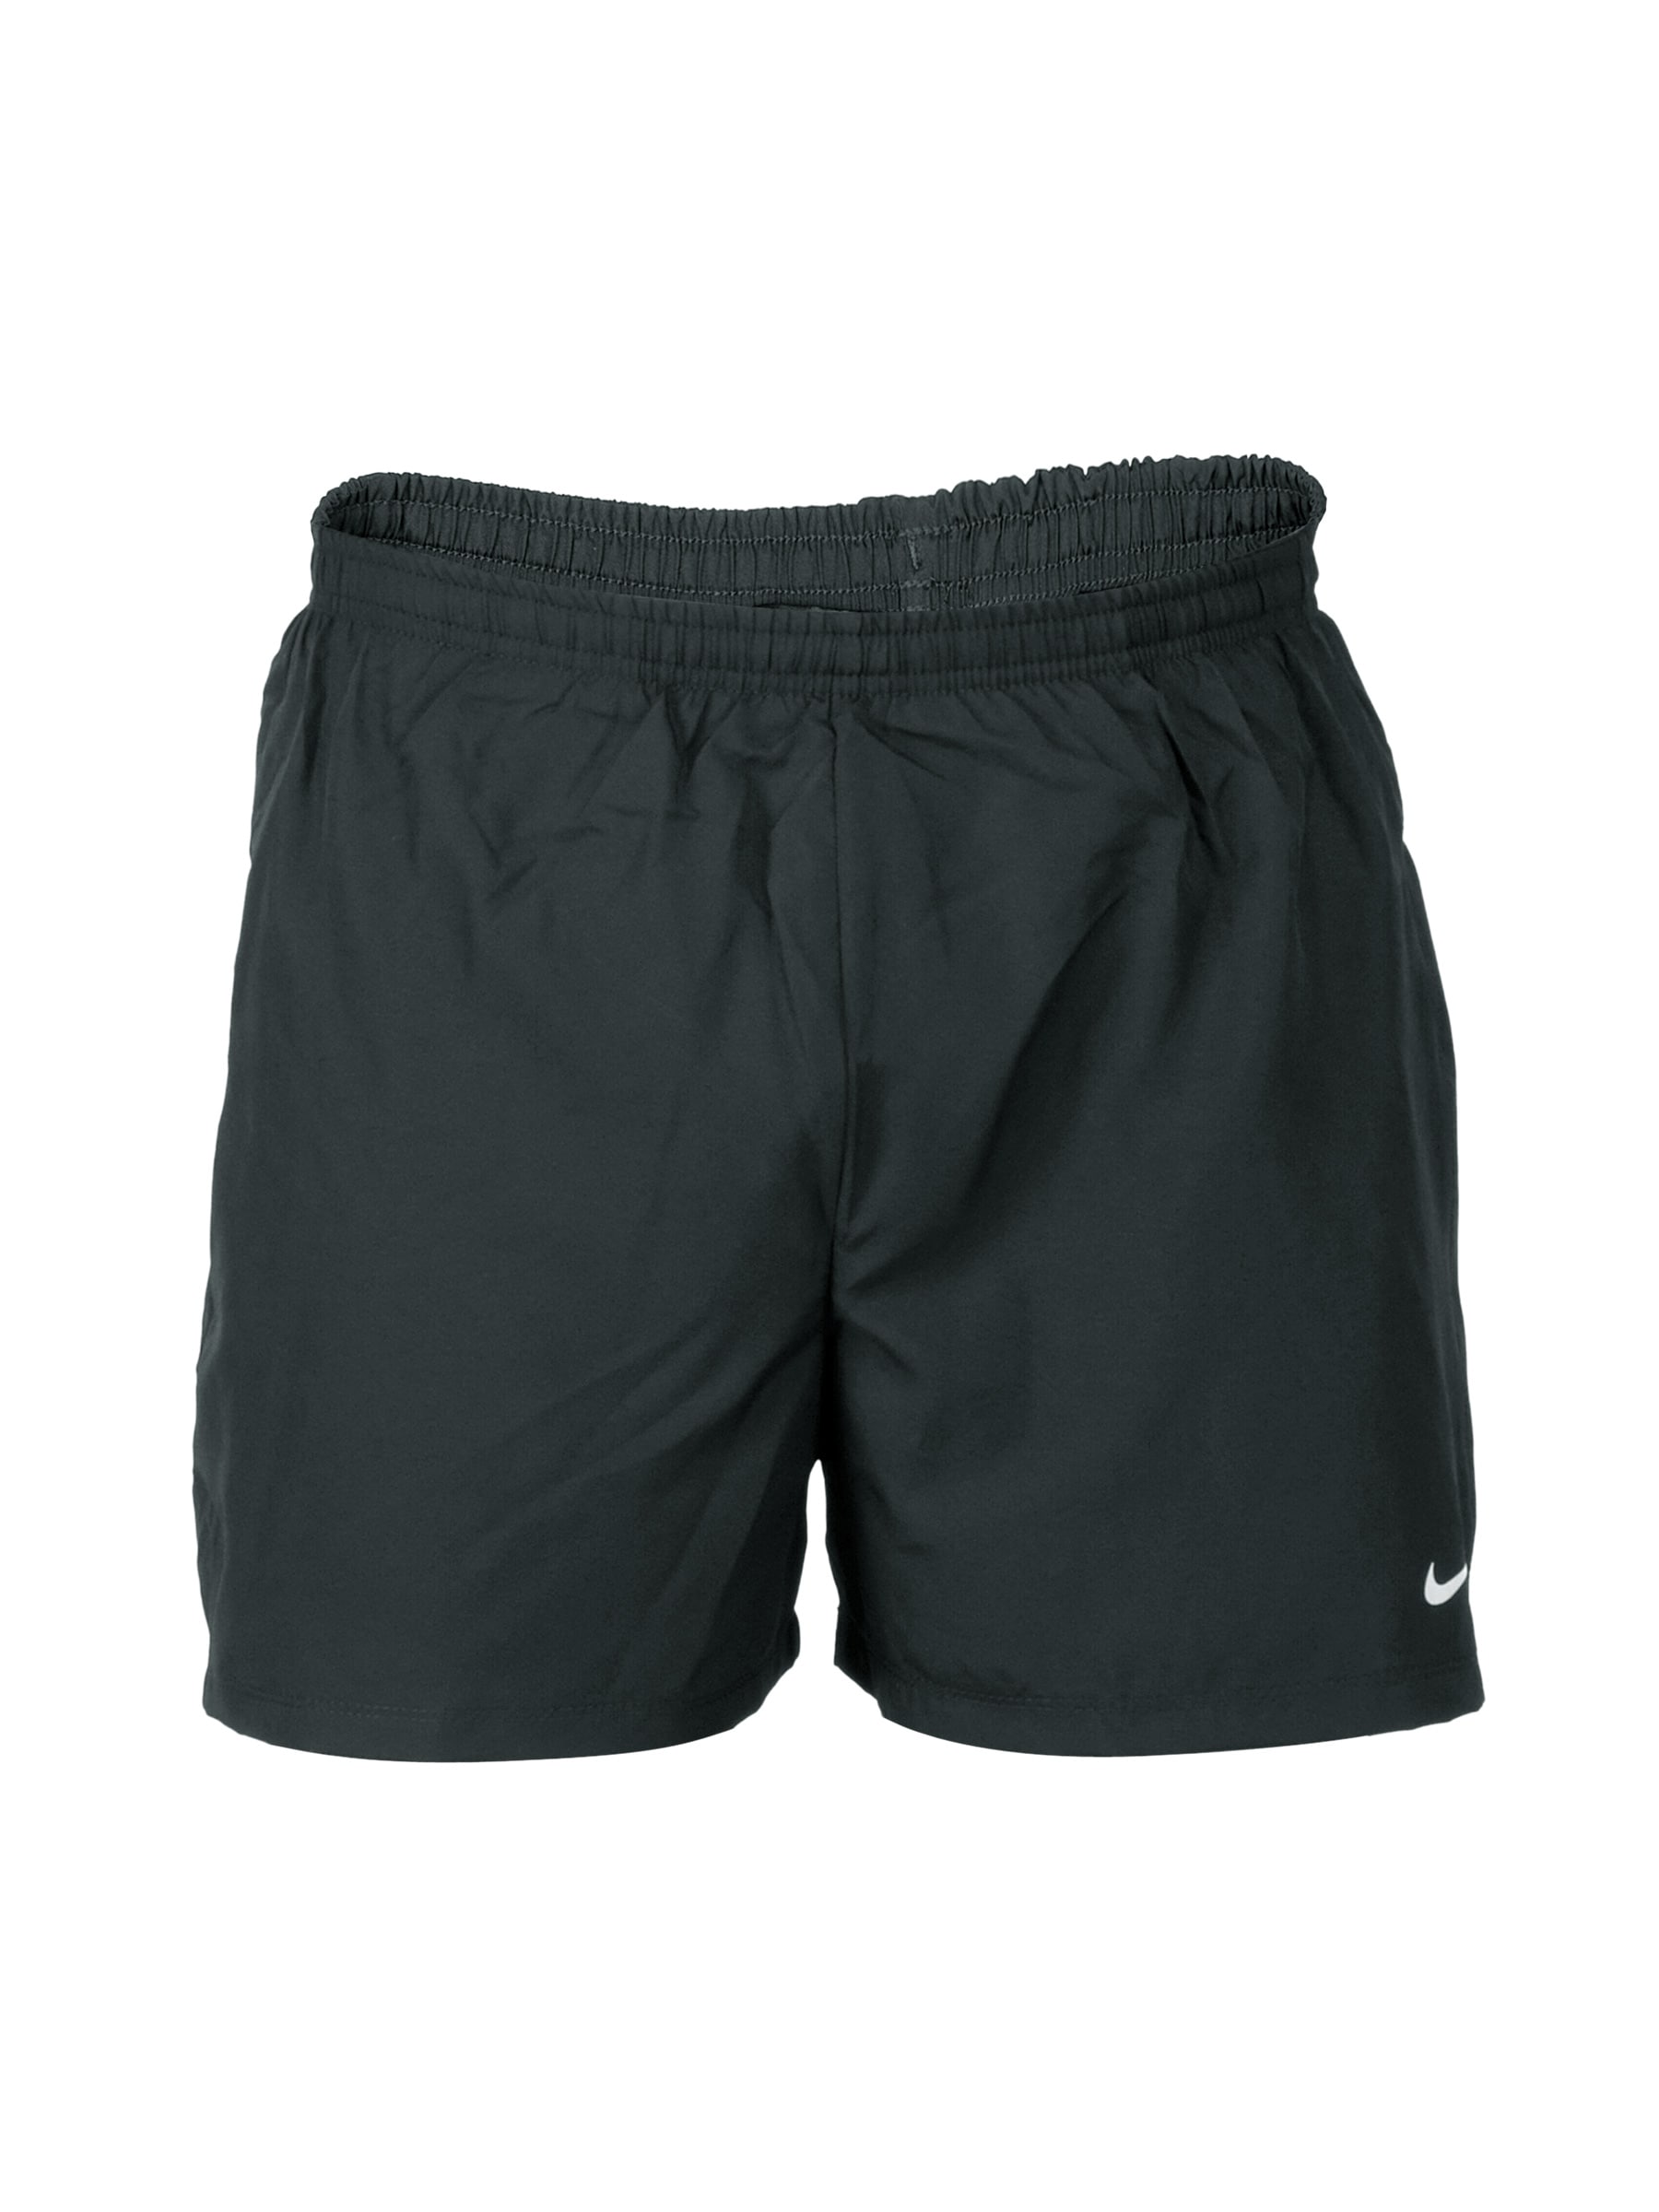 Nike Men Solid Navy Blue Shorts